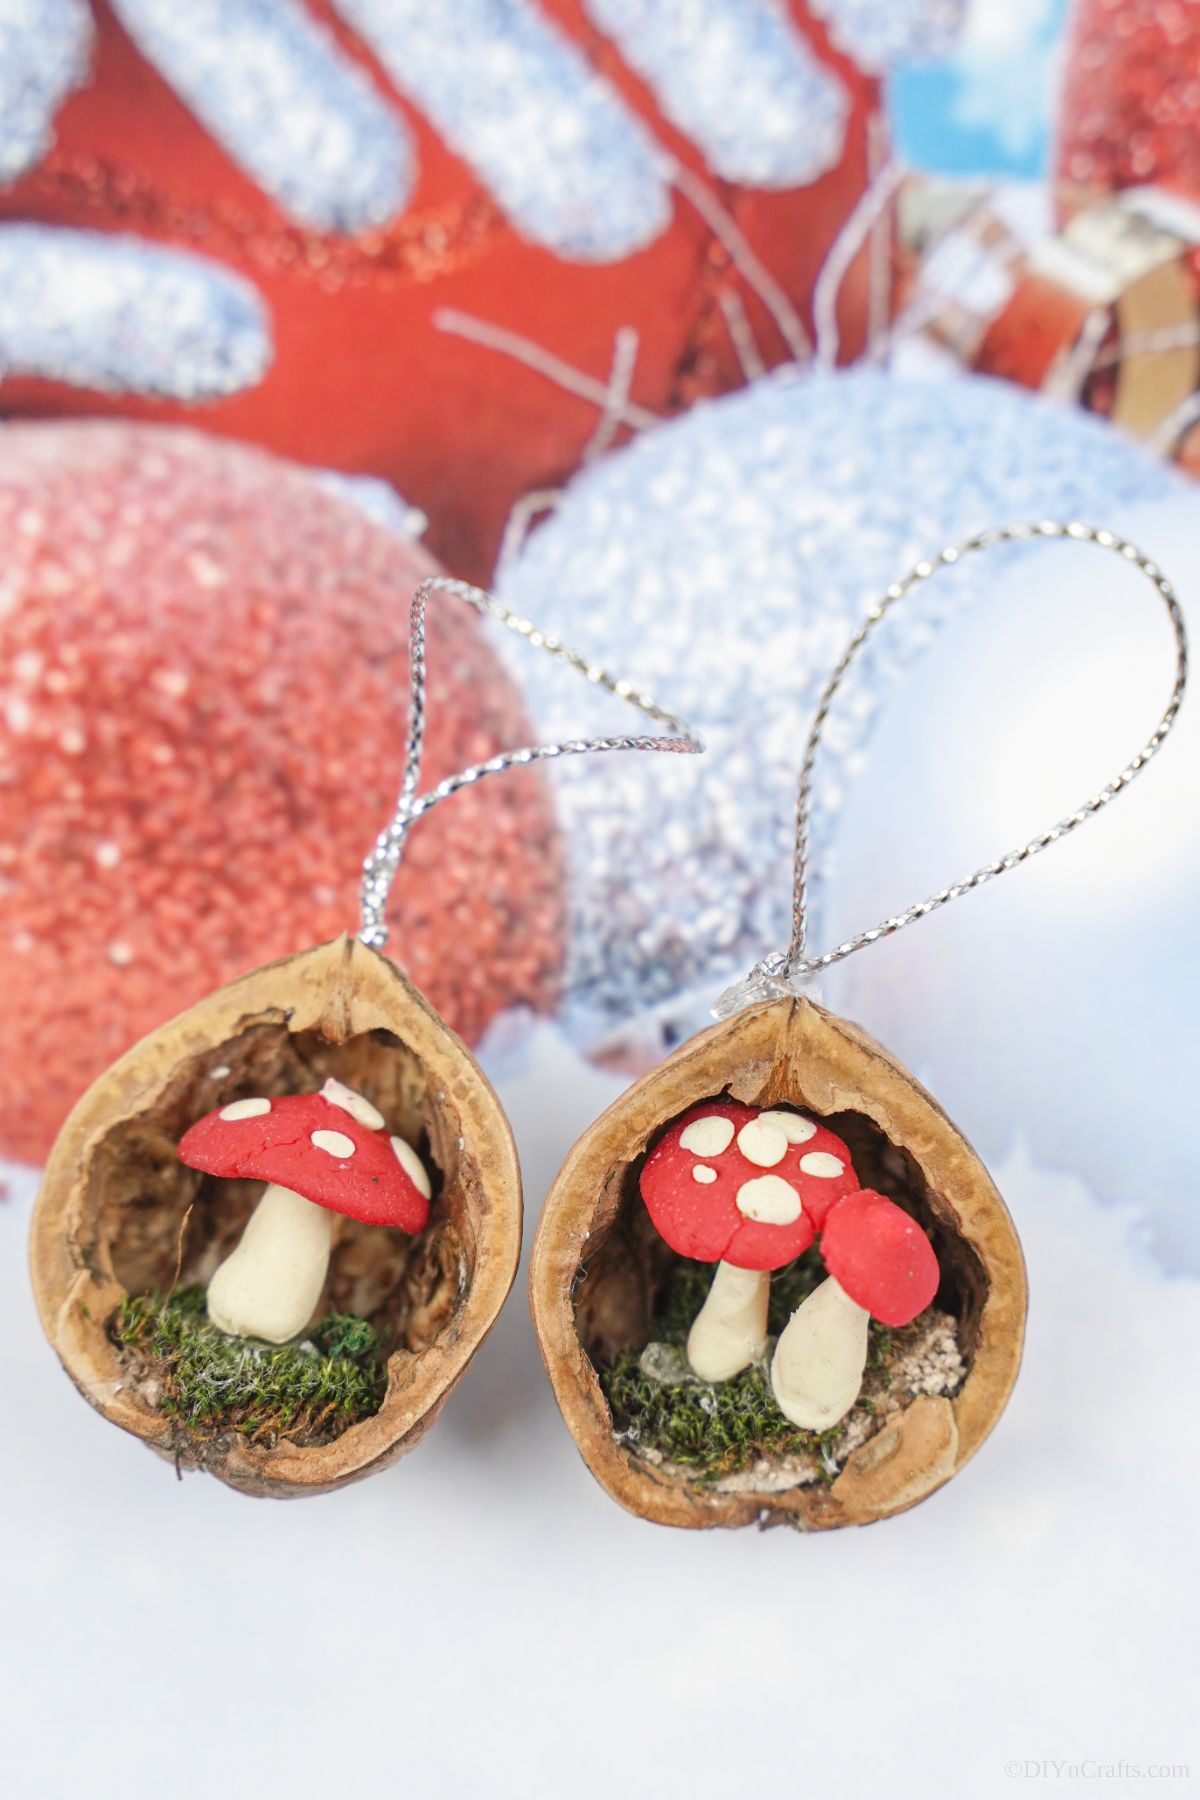 Scandinavian style walnut shell mushroom ornaments on holiday themed paper